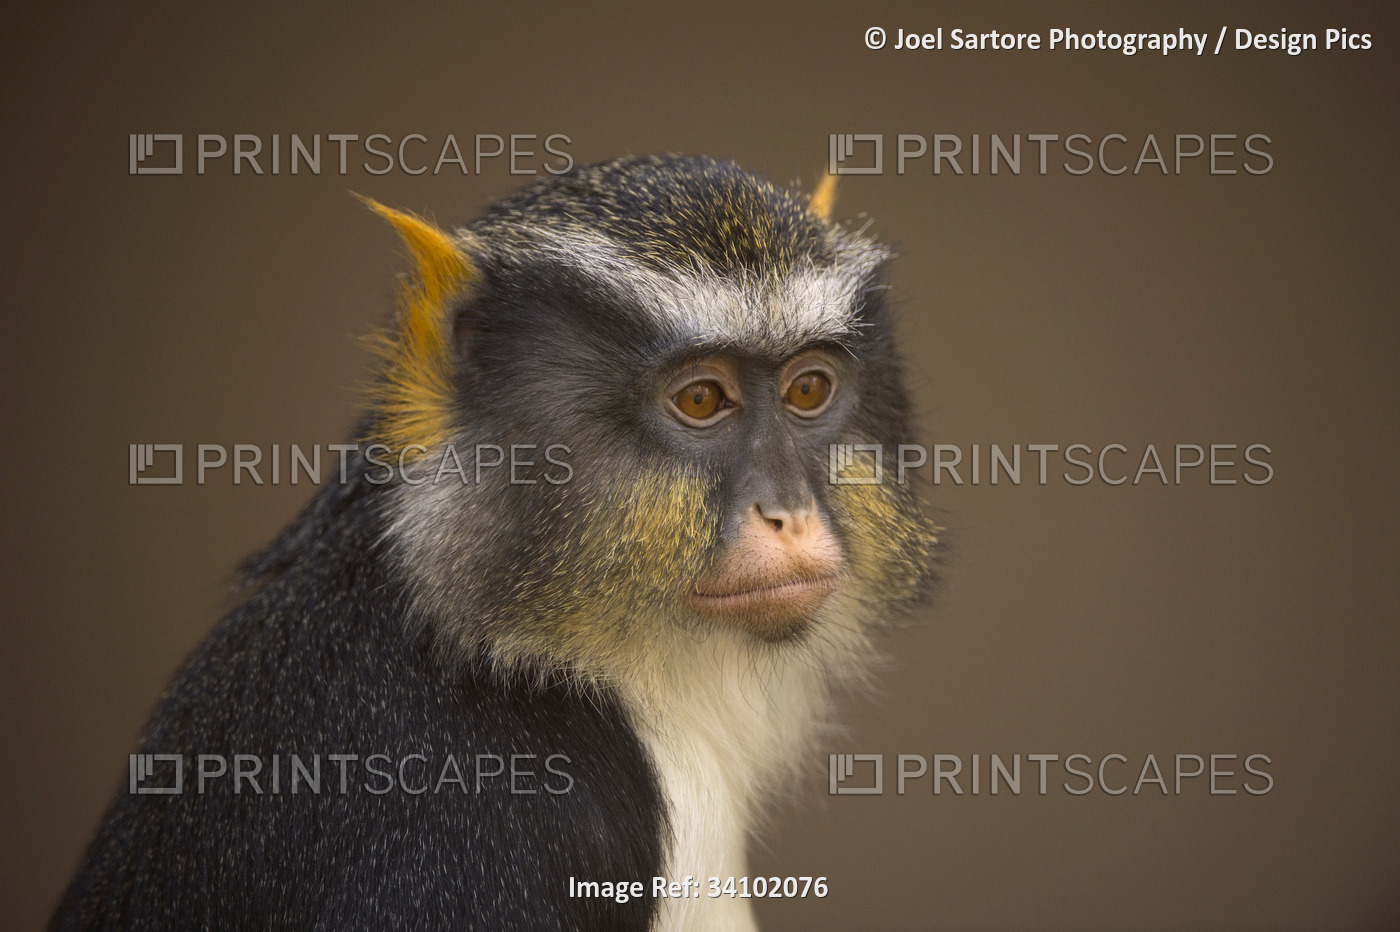 Close-up portrait of a Sykes' monkey (Cercopithecus albogularis) against a ...